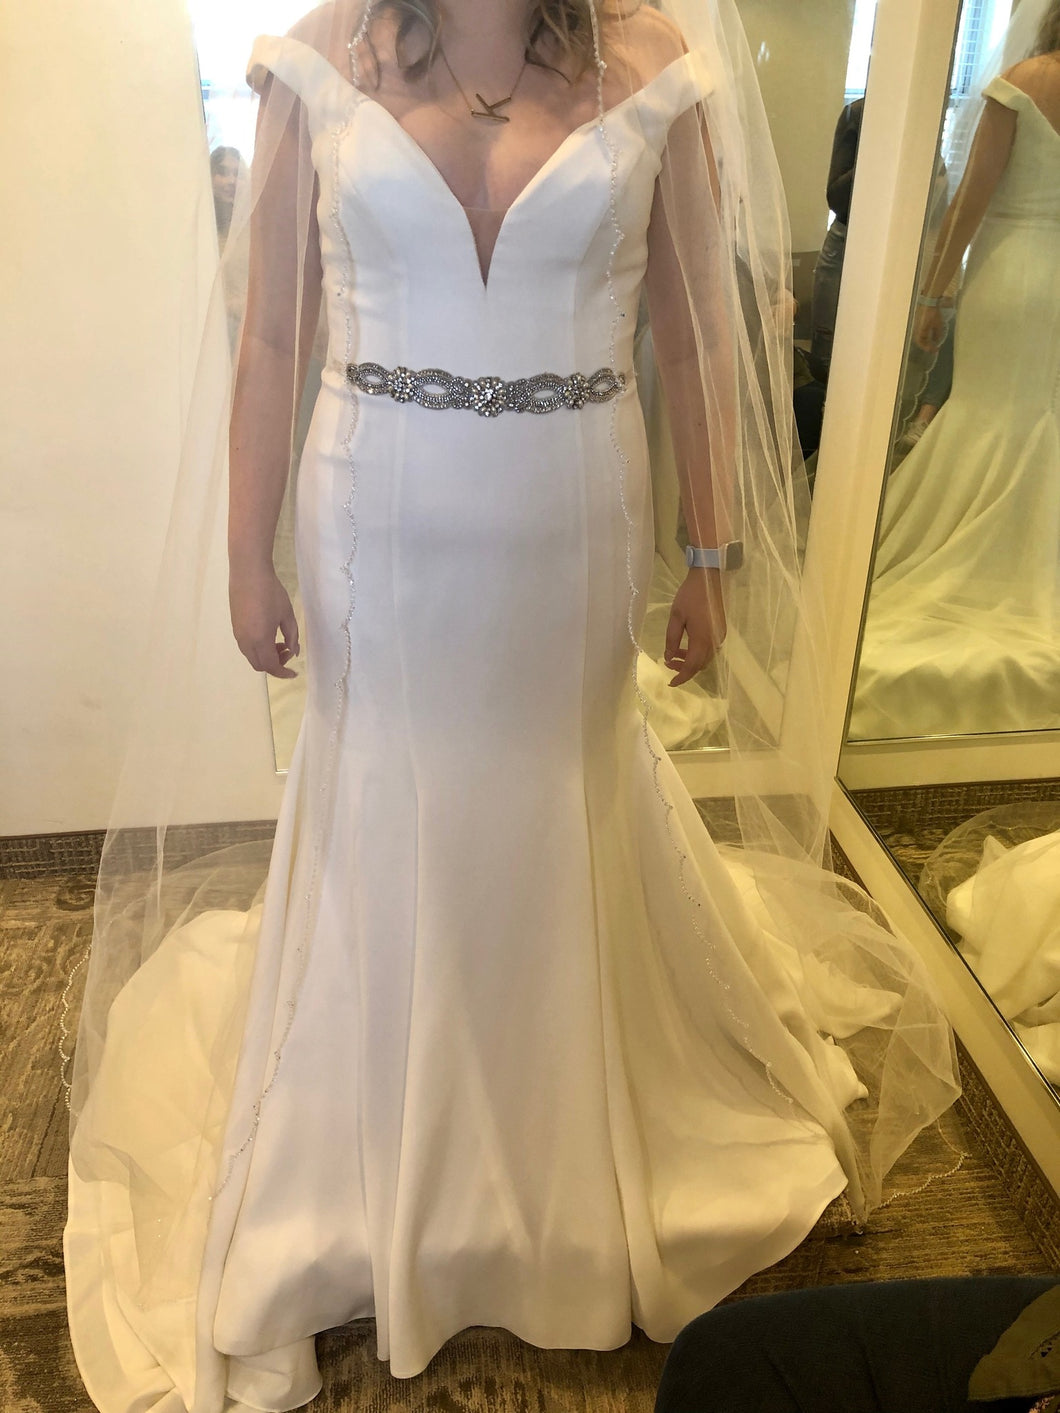 Mori Lee '#6903 Paxton' wedding dress size-08 NEW